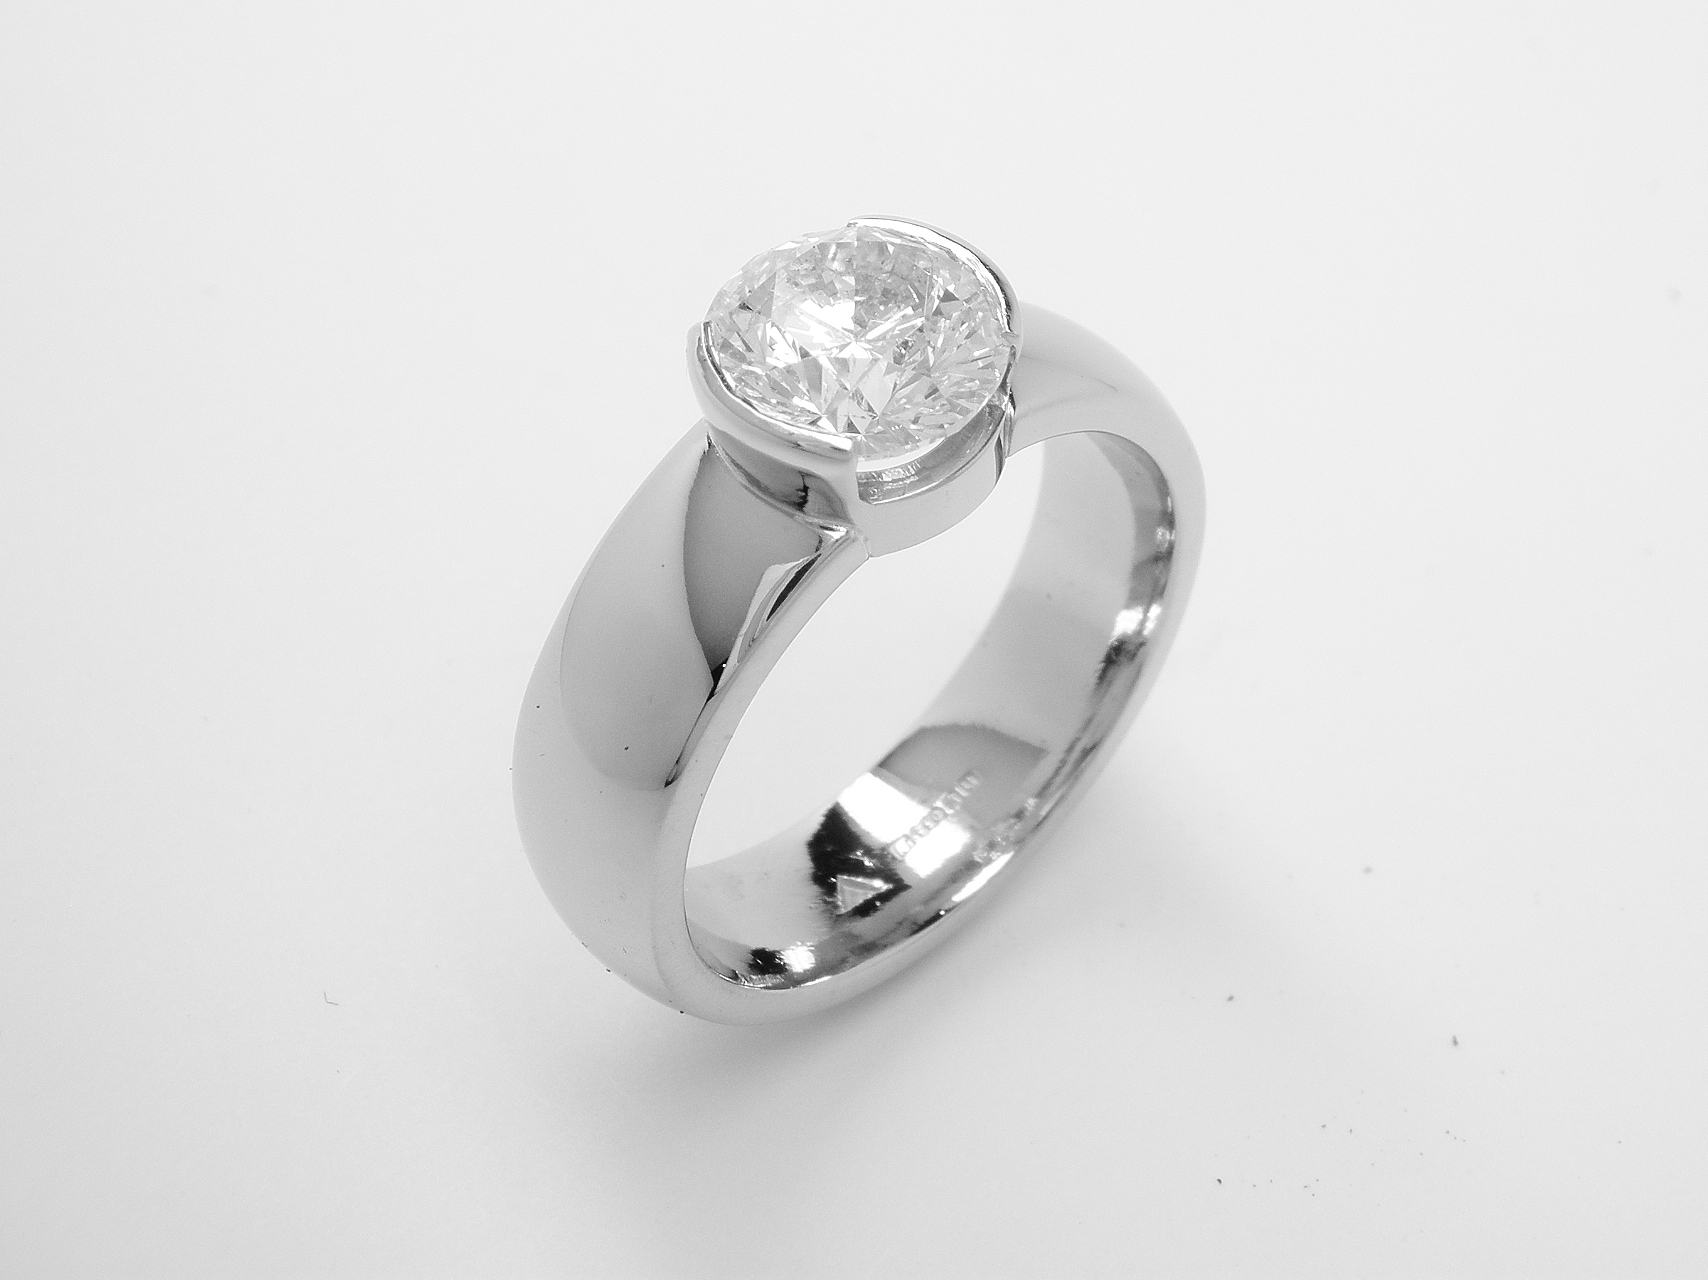 A part rub-over set single stone round brilliant cut diamond ring mounted in palladium and platinum.